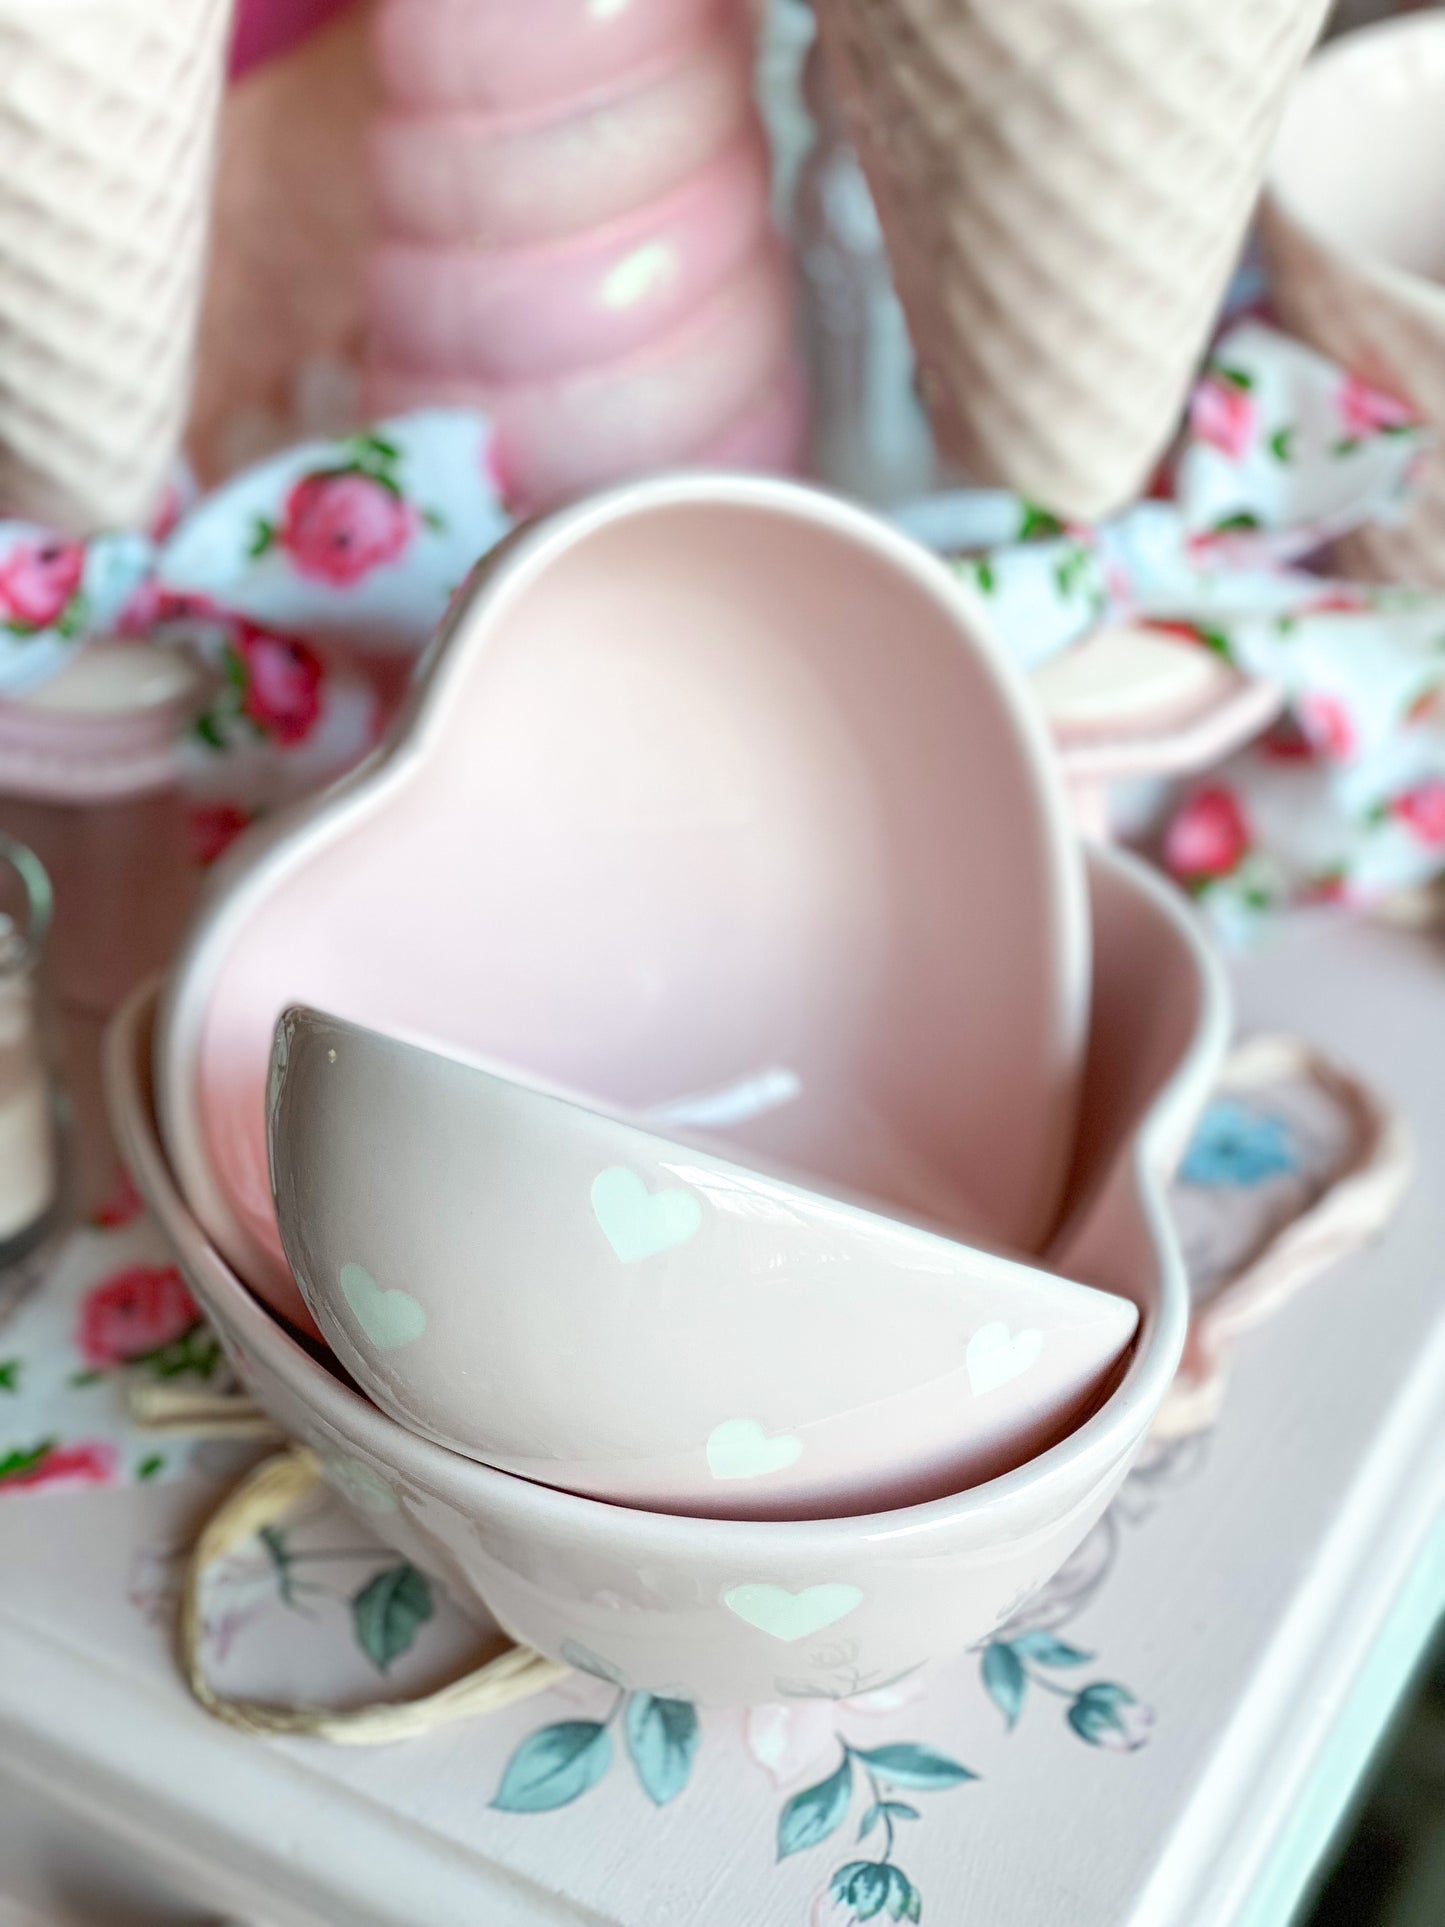 Set of 3 Pink Nesting Heart Bowls